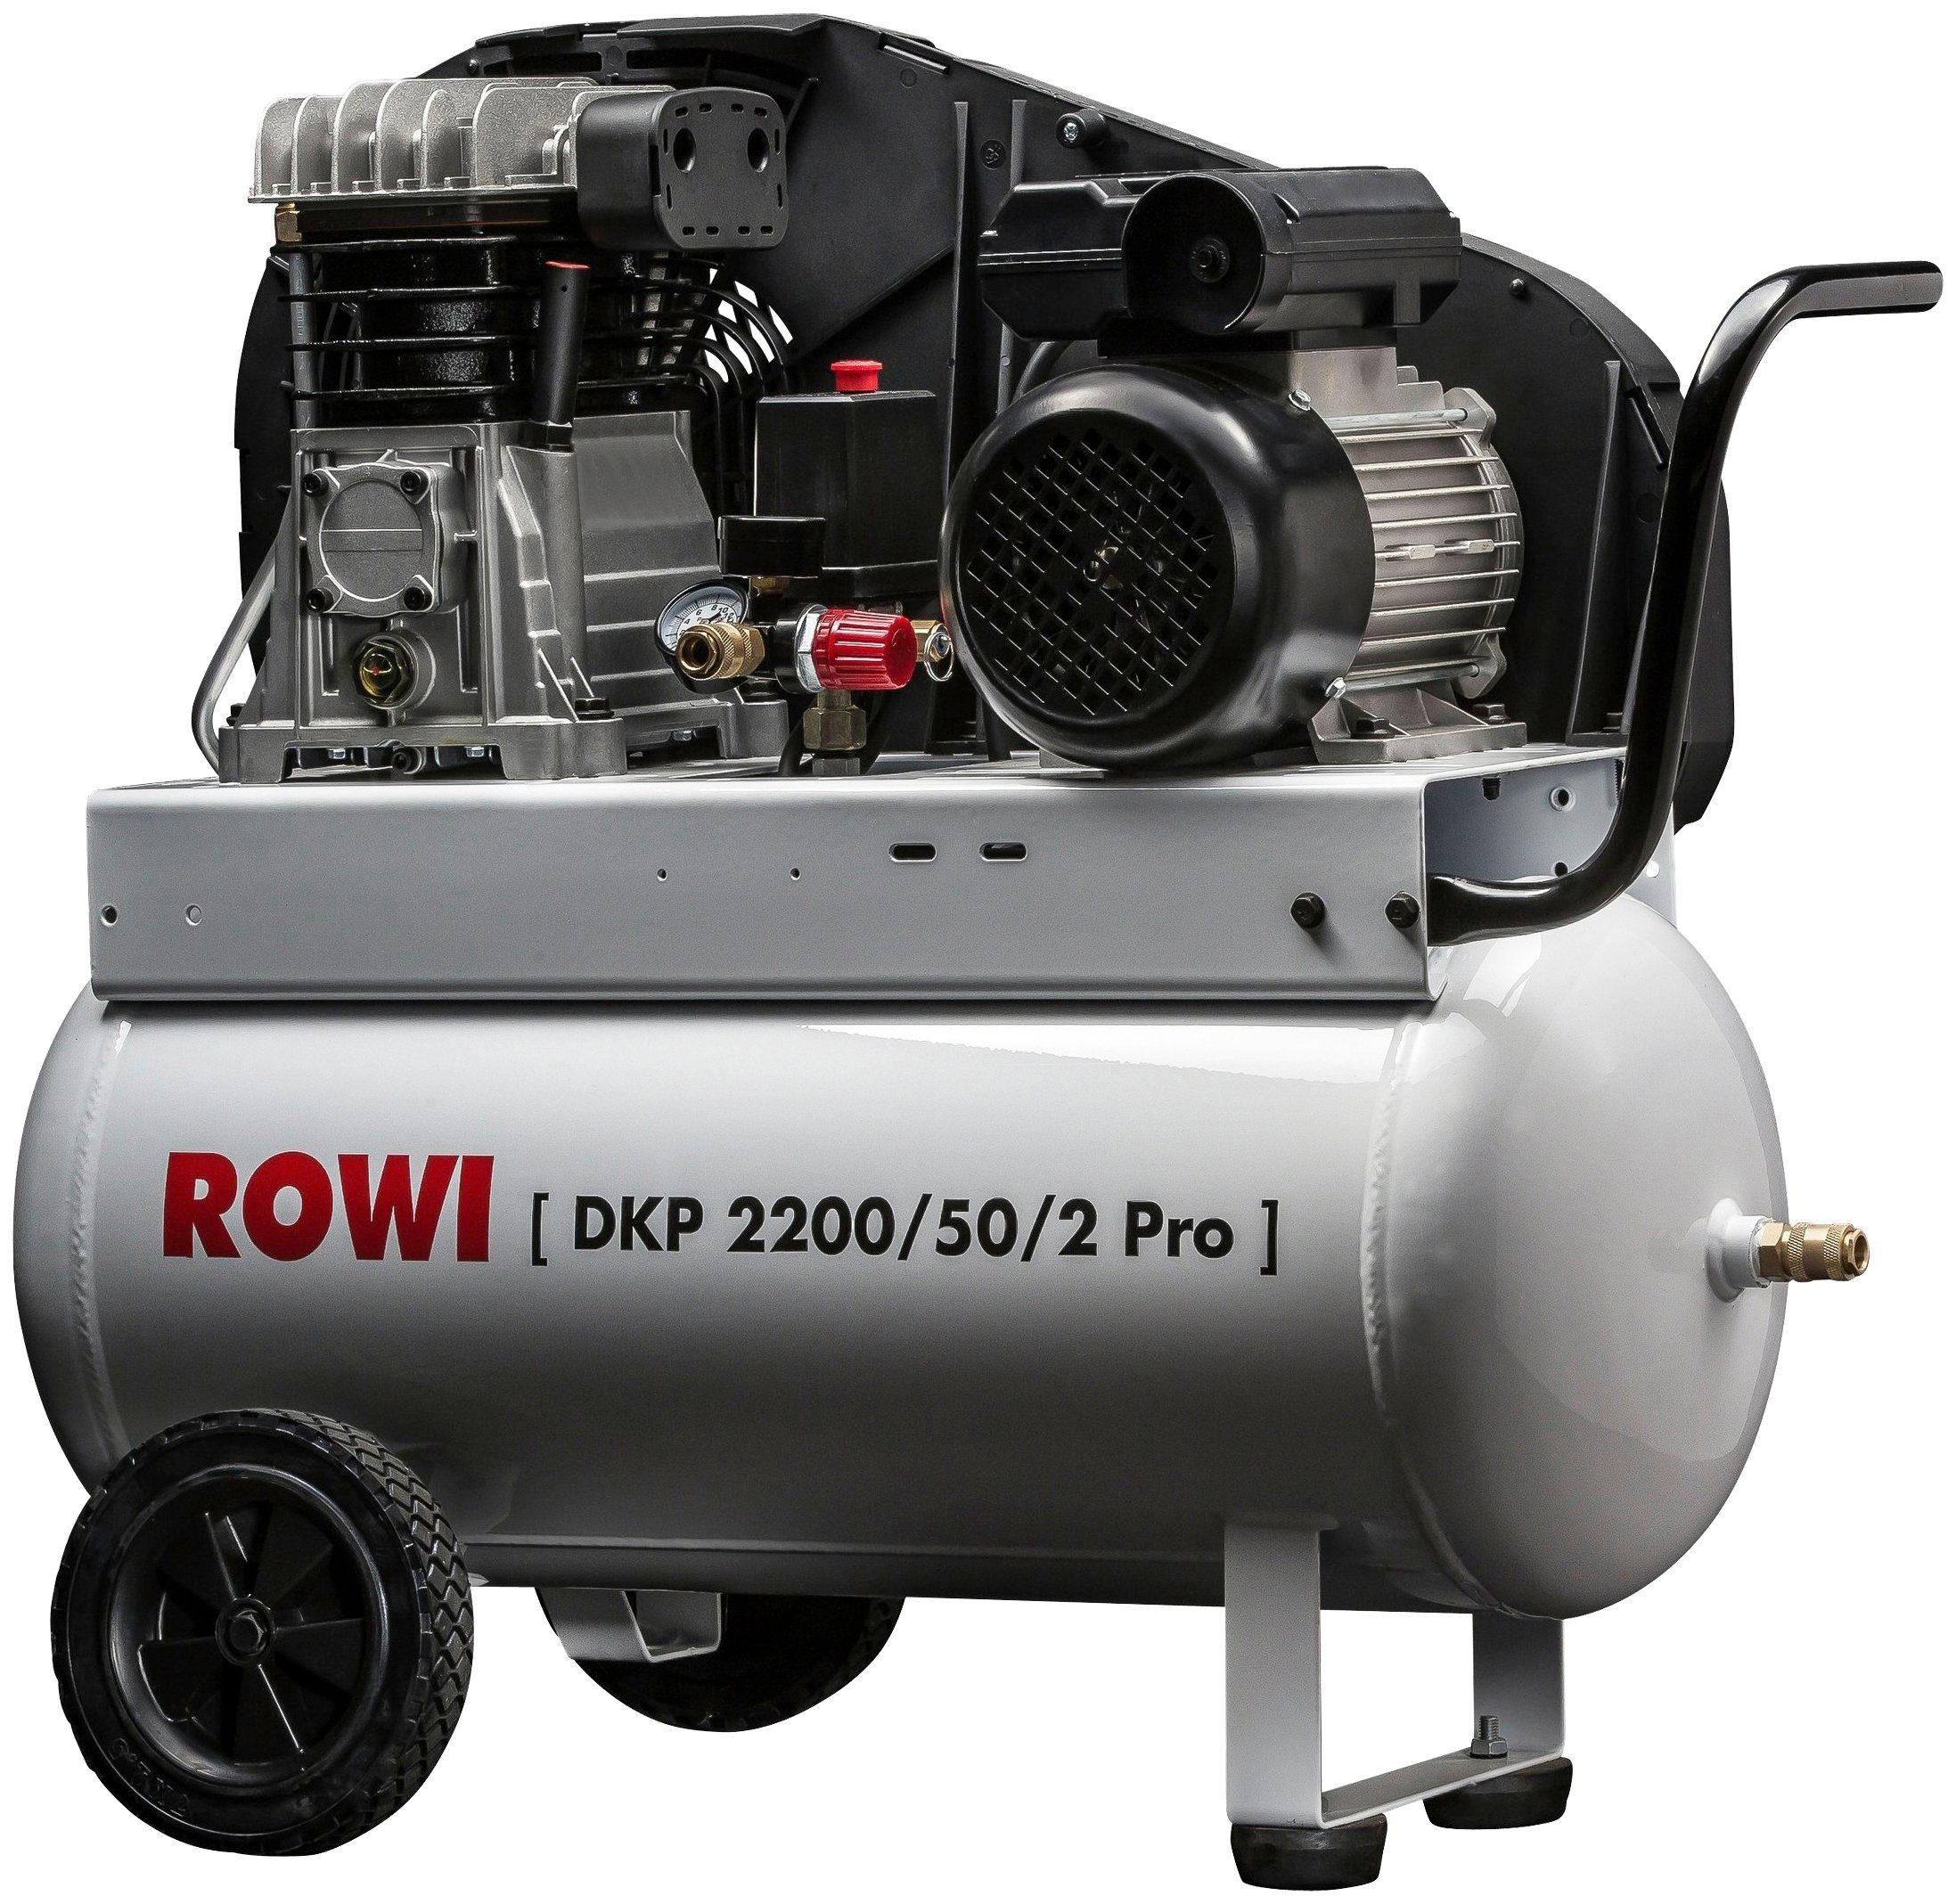 2200 ROWI l, W, Pro, 50 2200/50/2 DKP 10 Kompressor Packung bar, max.